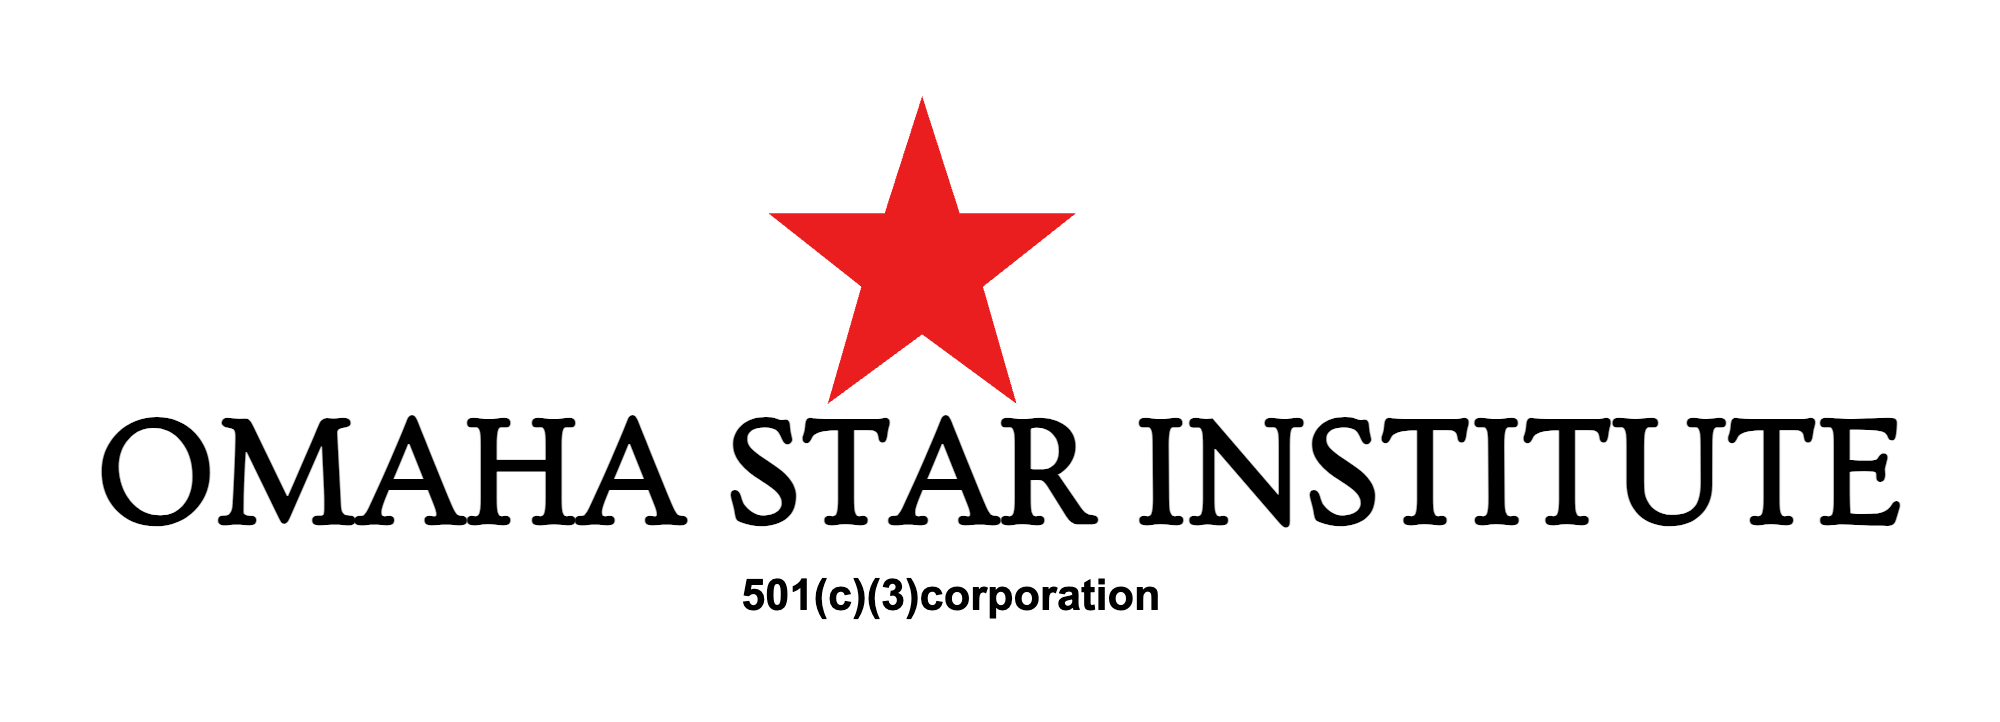 Omaha Star institute logo